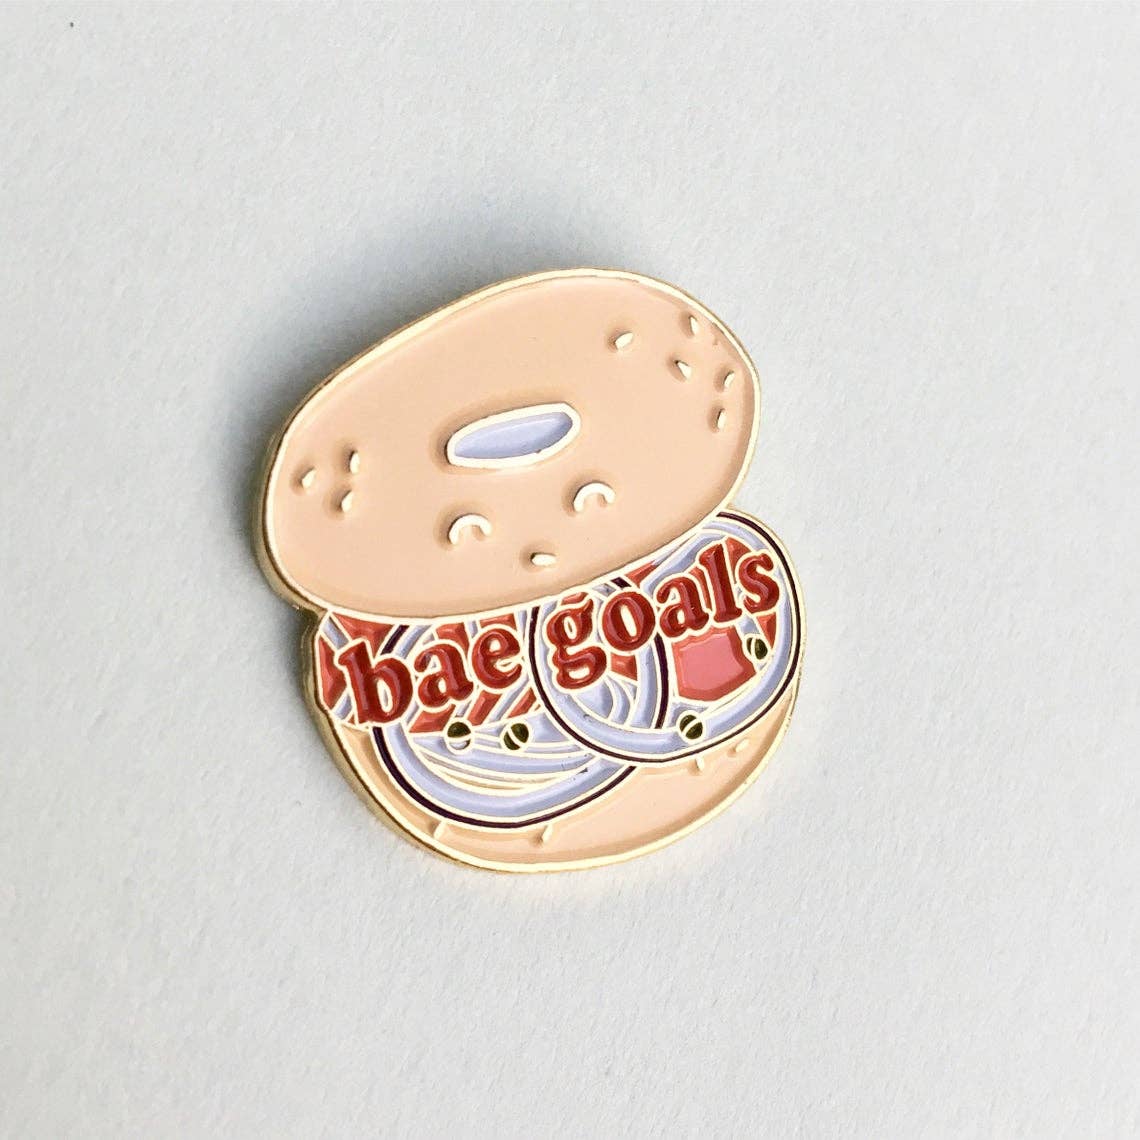 Bagel enamel pin that reads "Bae goals" on an open faced bagel. 